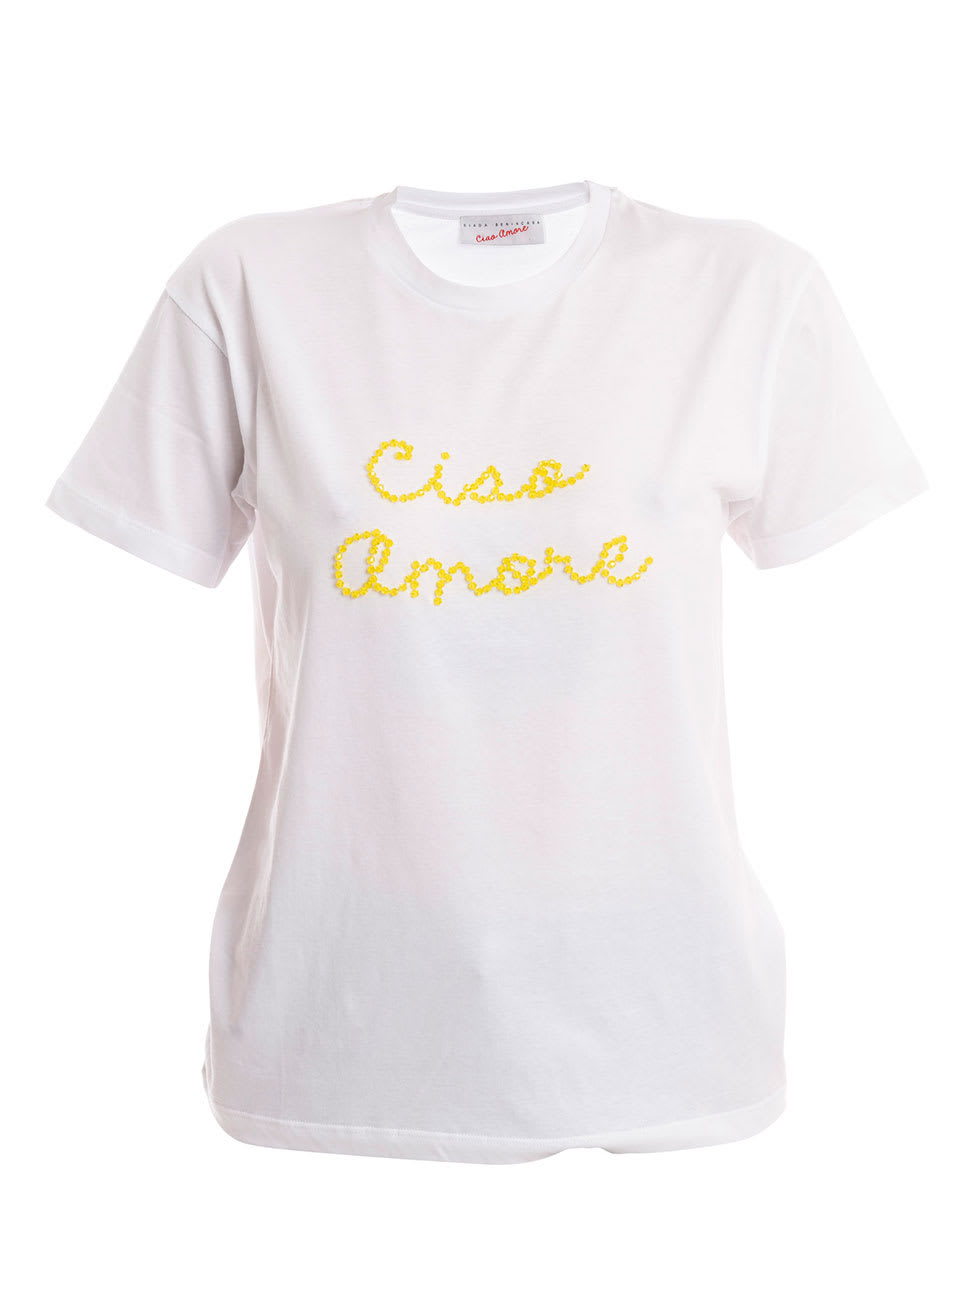 Giada Benincasa Ciao Amore Embroidery T-shirt